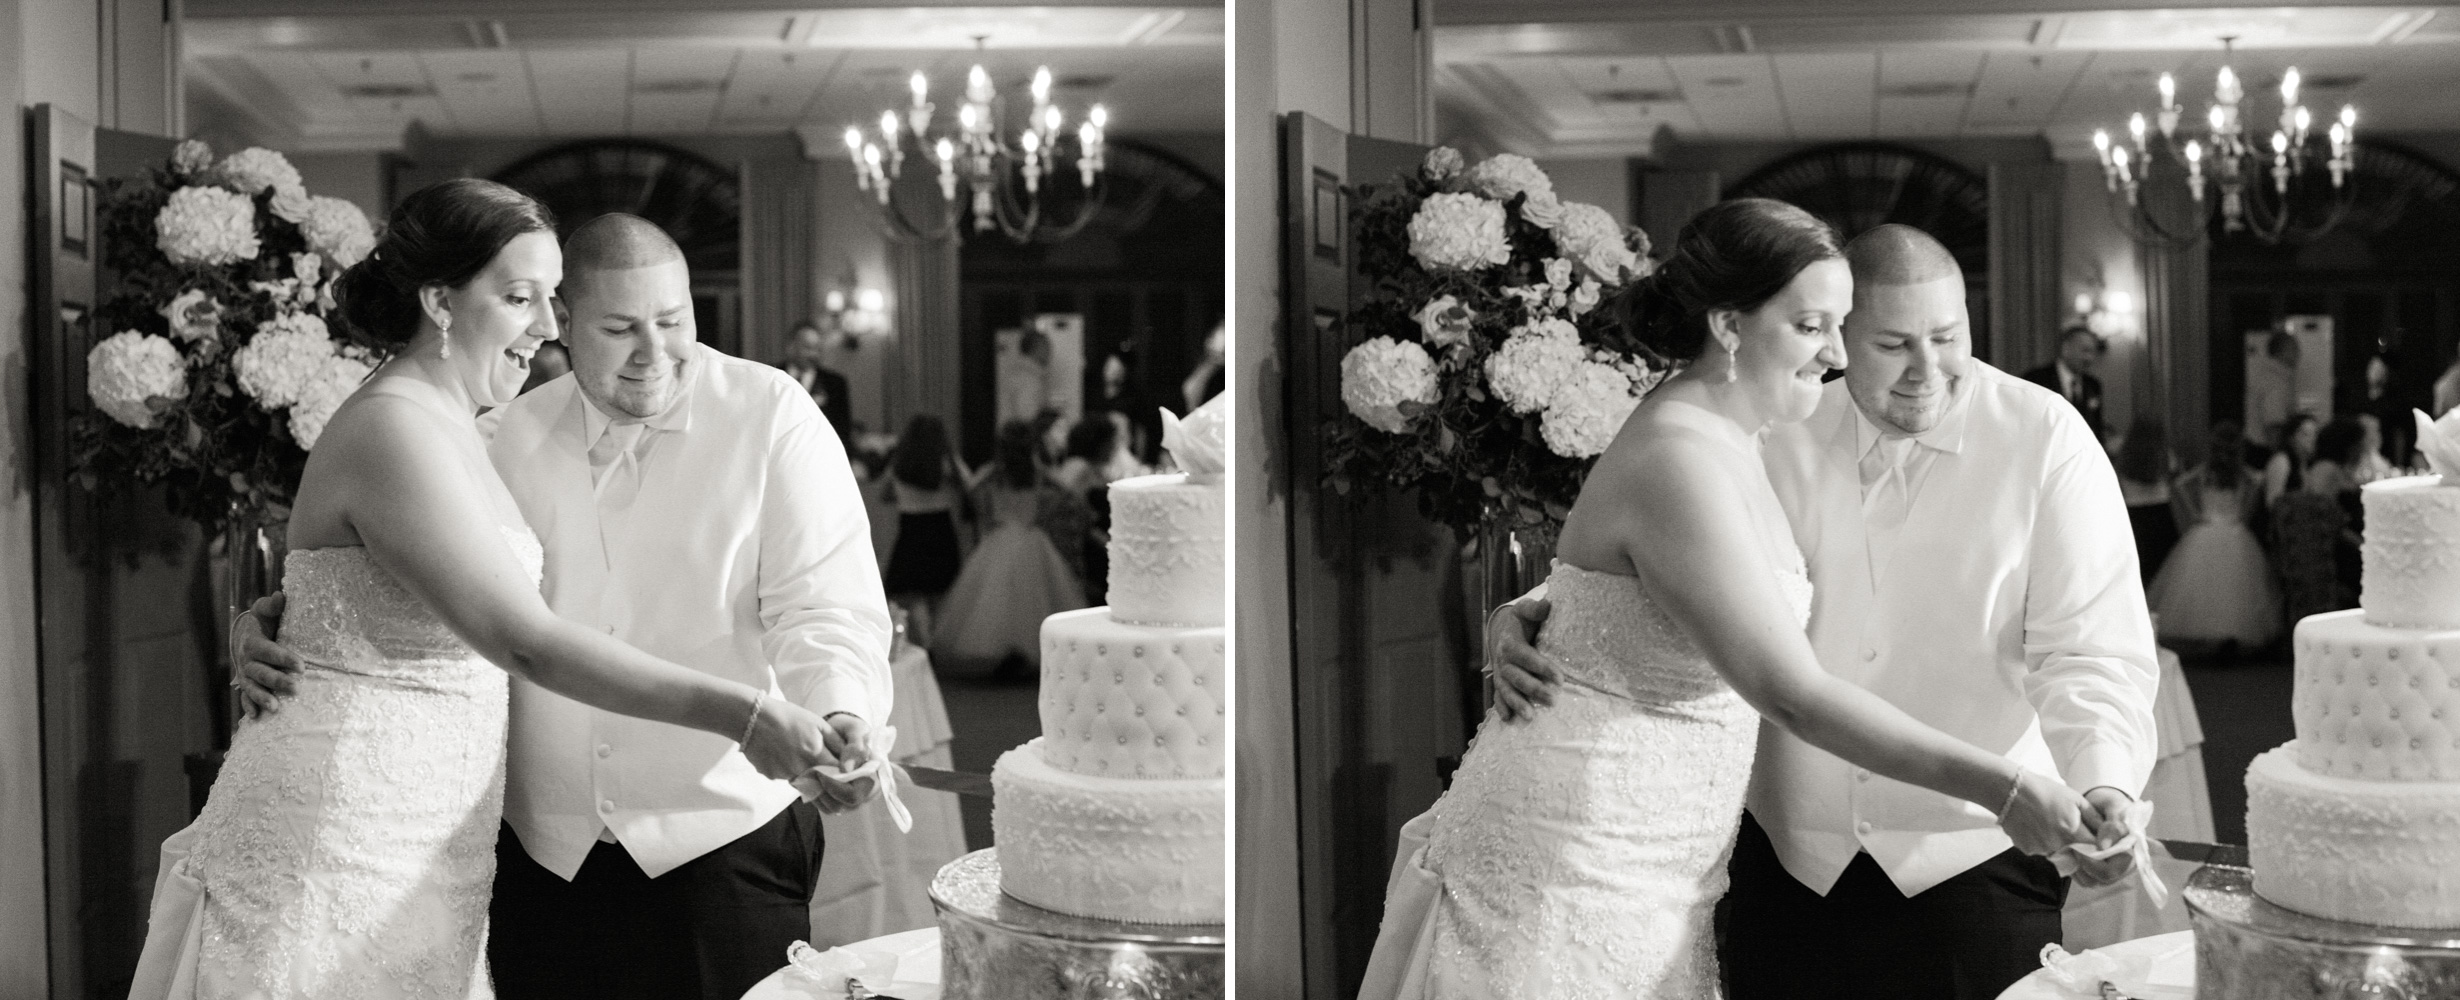 cake-cutting wedding photography at Bernards Inn